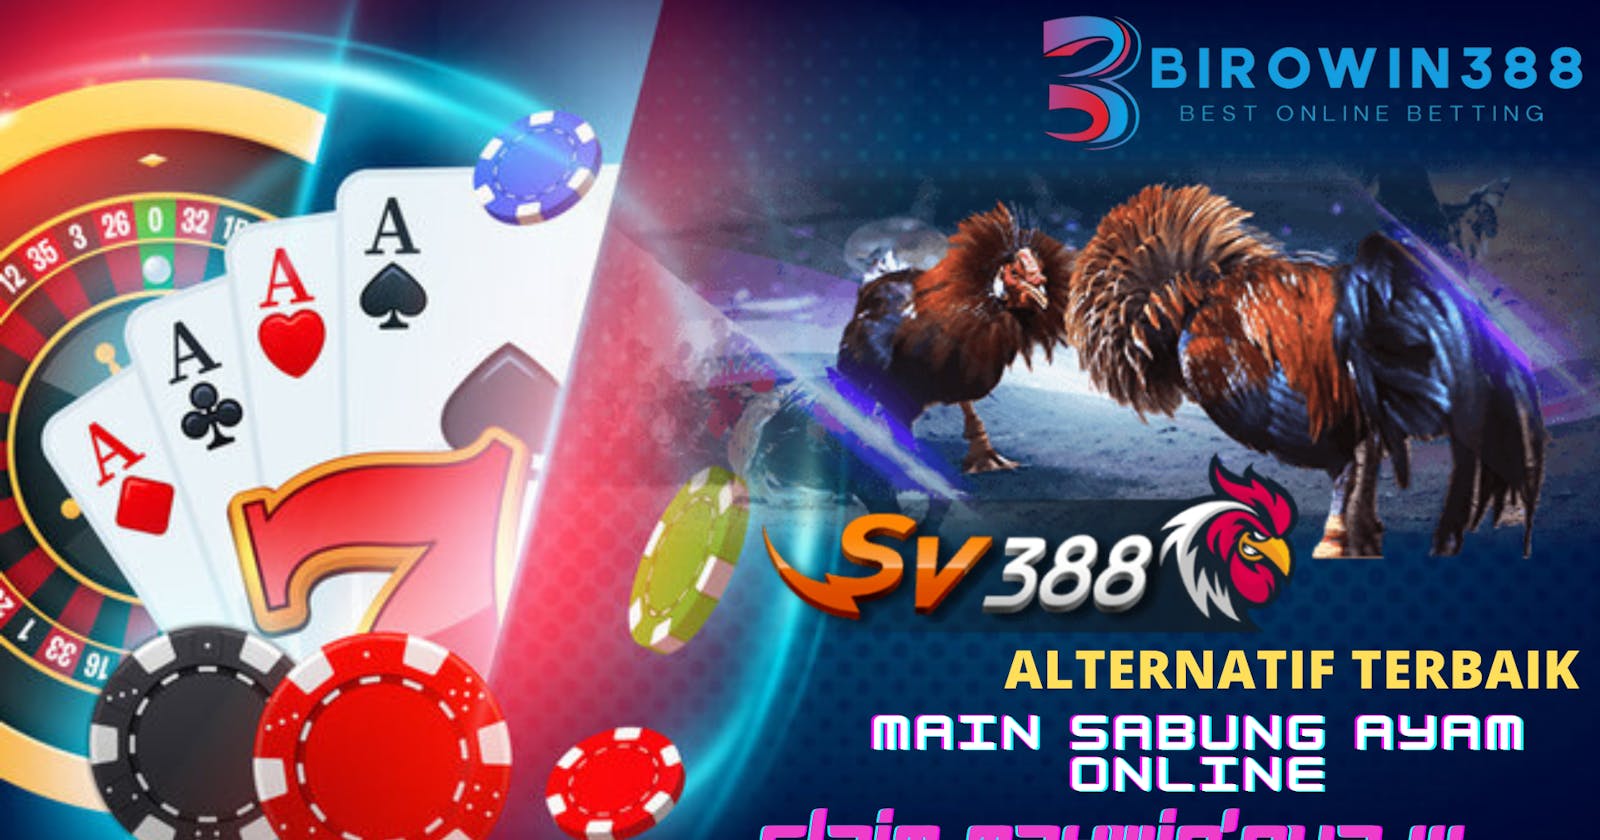 BIROWIN388 Promo Bonus 7 x Win Sabung Ayam Online 24 Jam